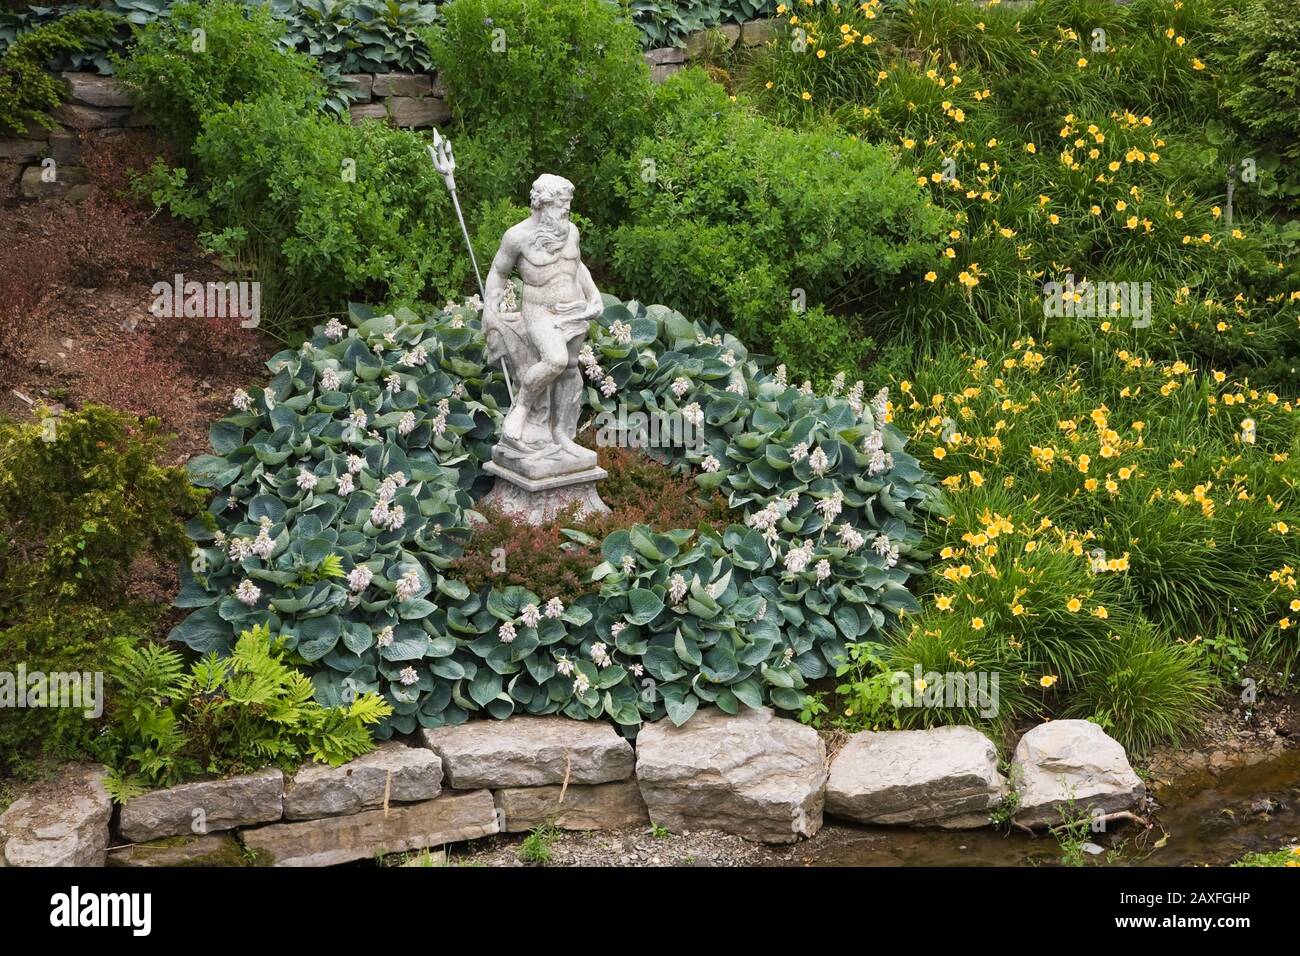 Sculpture of Neptune surrounded by Hosta plants, yellow Hemerocallis - Daylily flowers in Five Senses Garden in La Seigneurie de L'Ile d'Orleans, Que Stock Photo